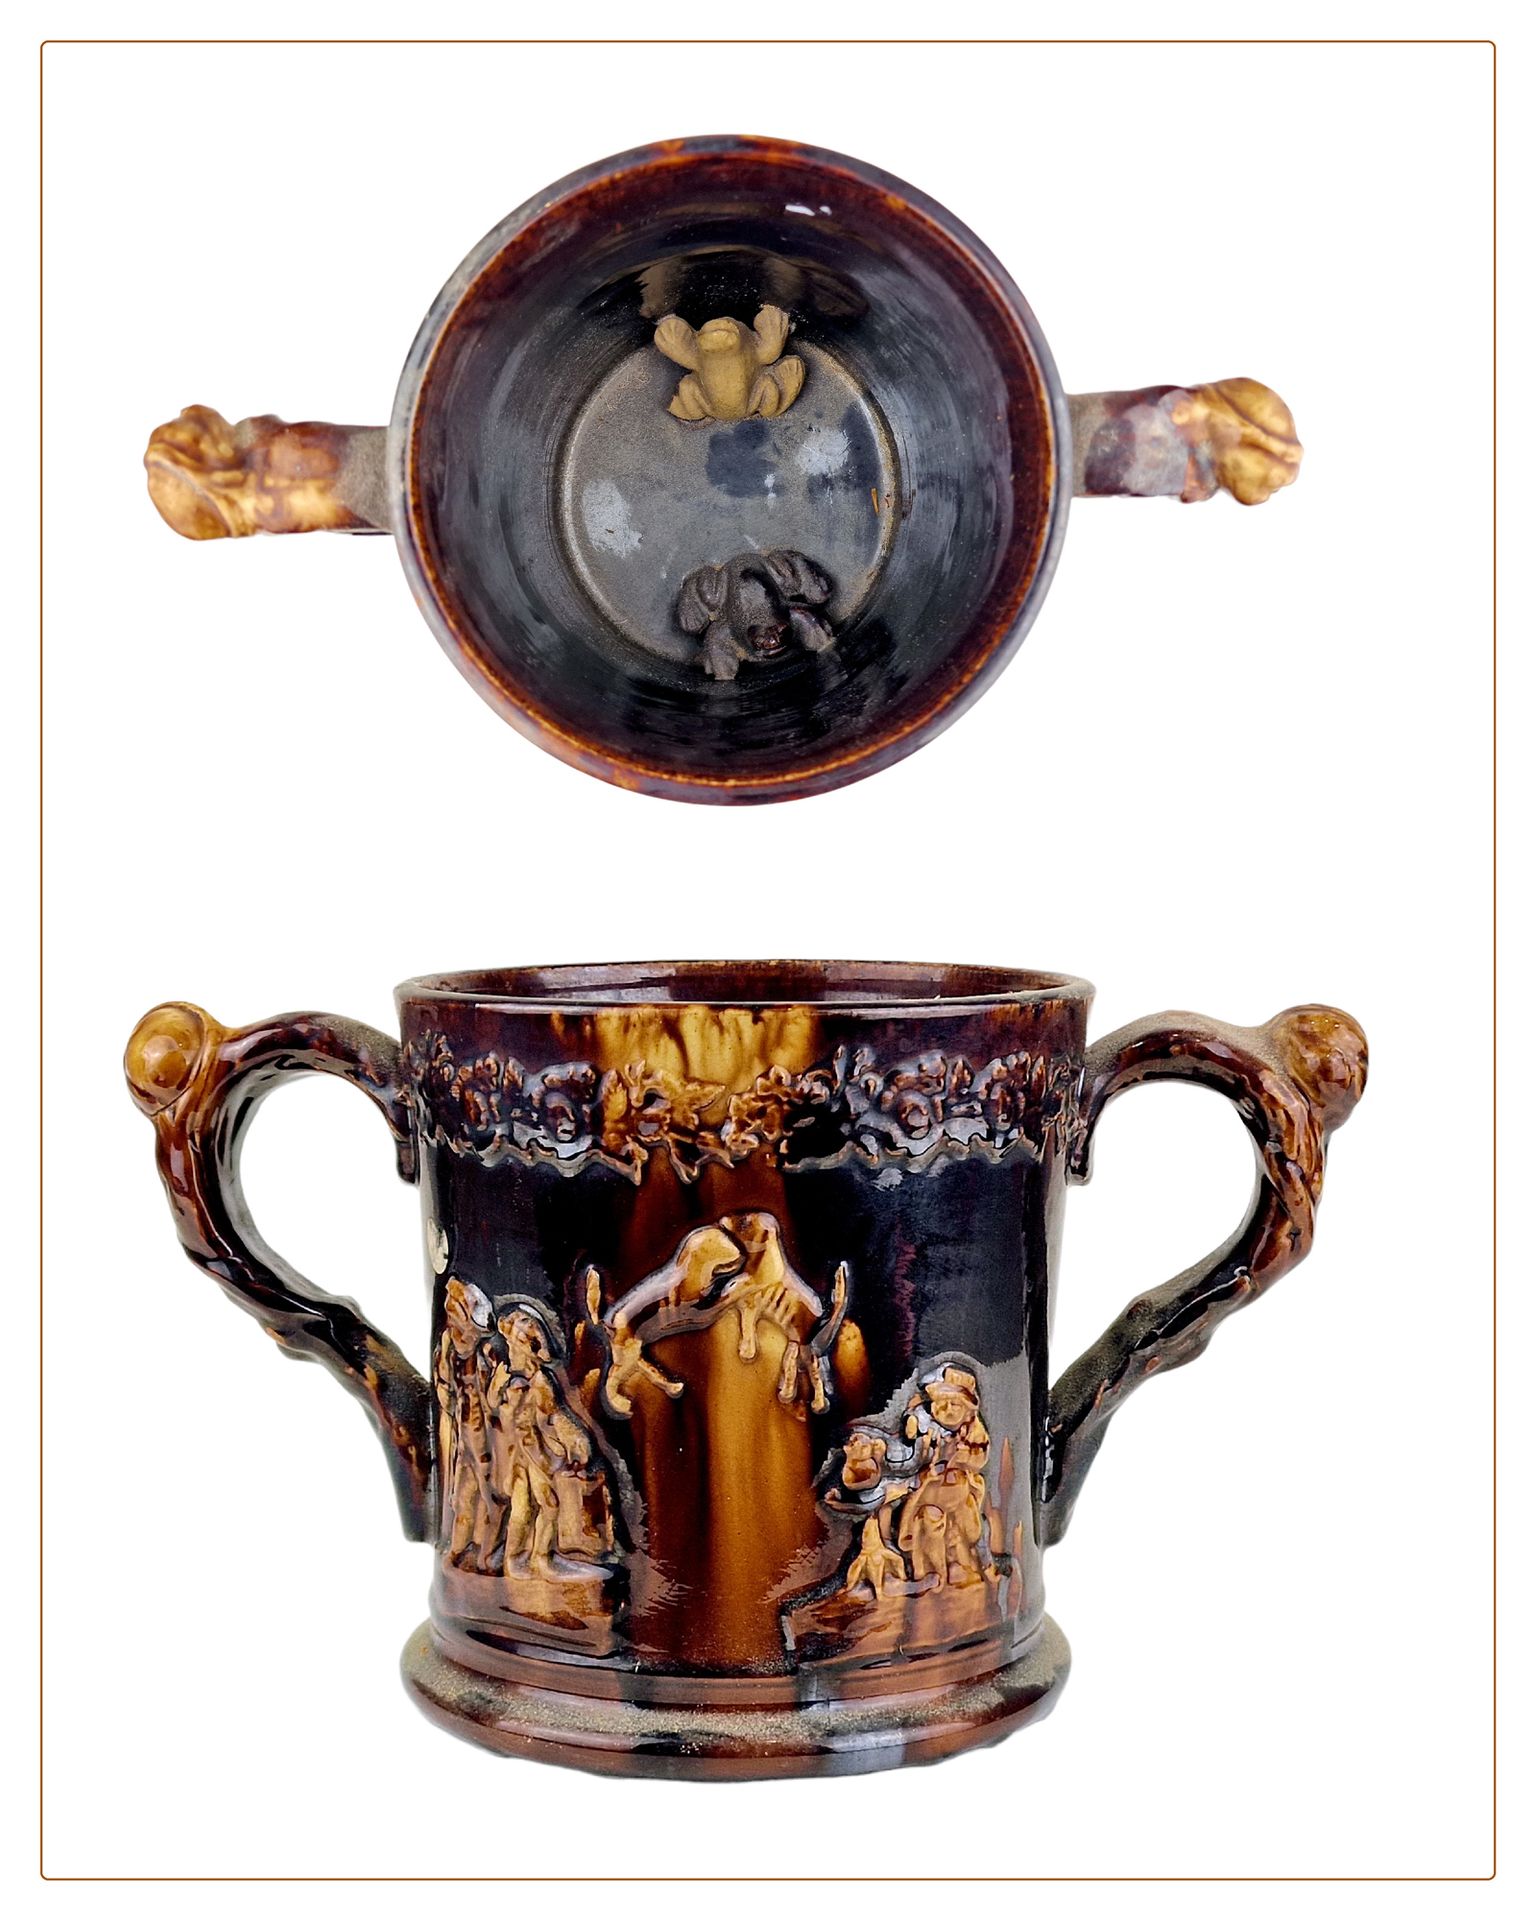 ECOLE DU NORD, 20ème SIECLE 有两个手柄的杯子



釉面陶器，饰有人物，里面有两只青蛙。

尺寸：17 x 16 cm

免费优惠